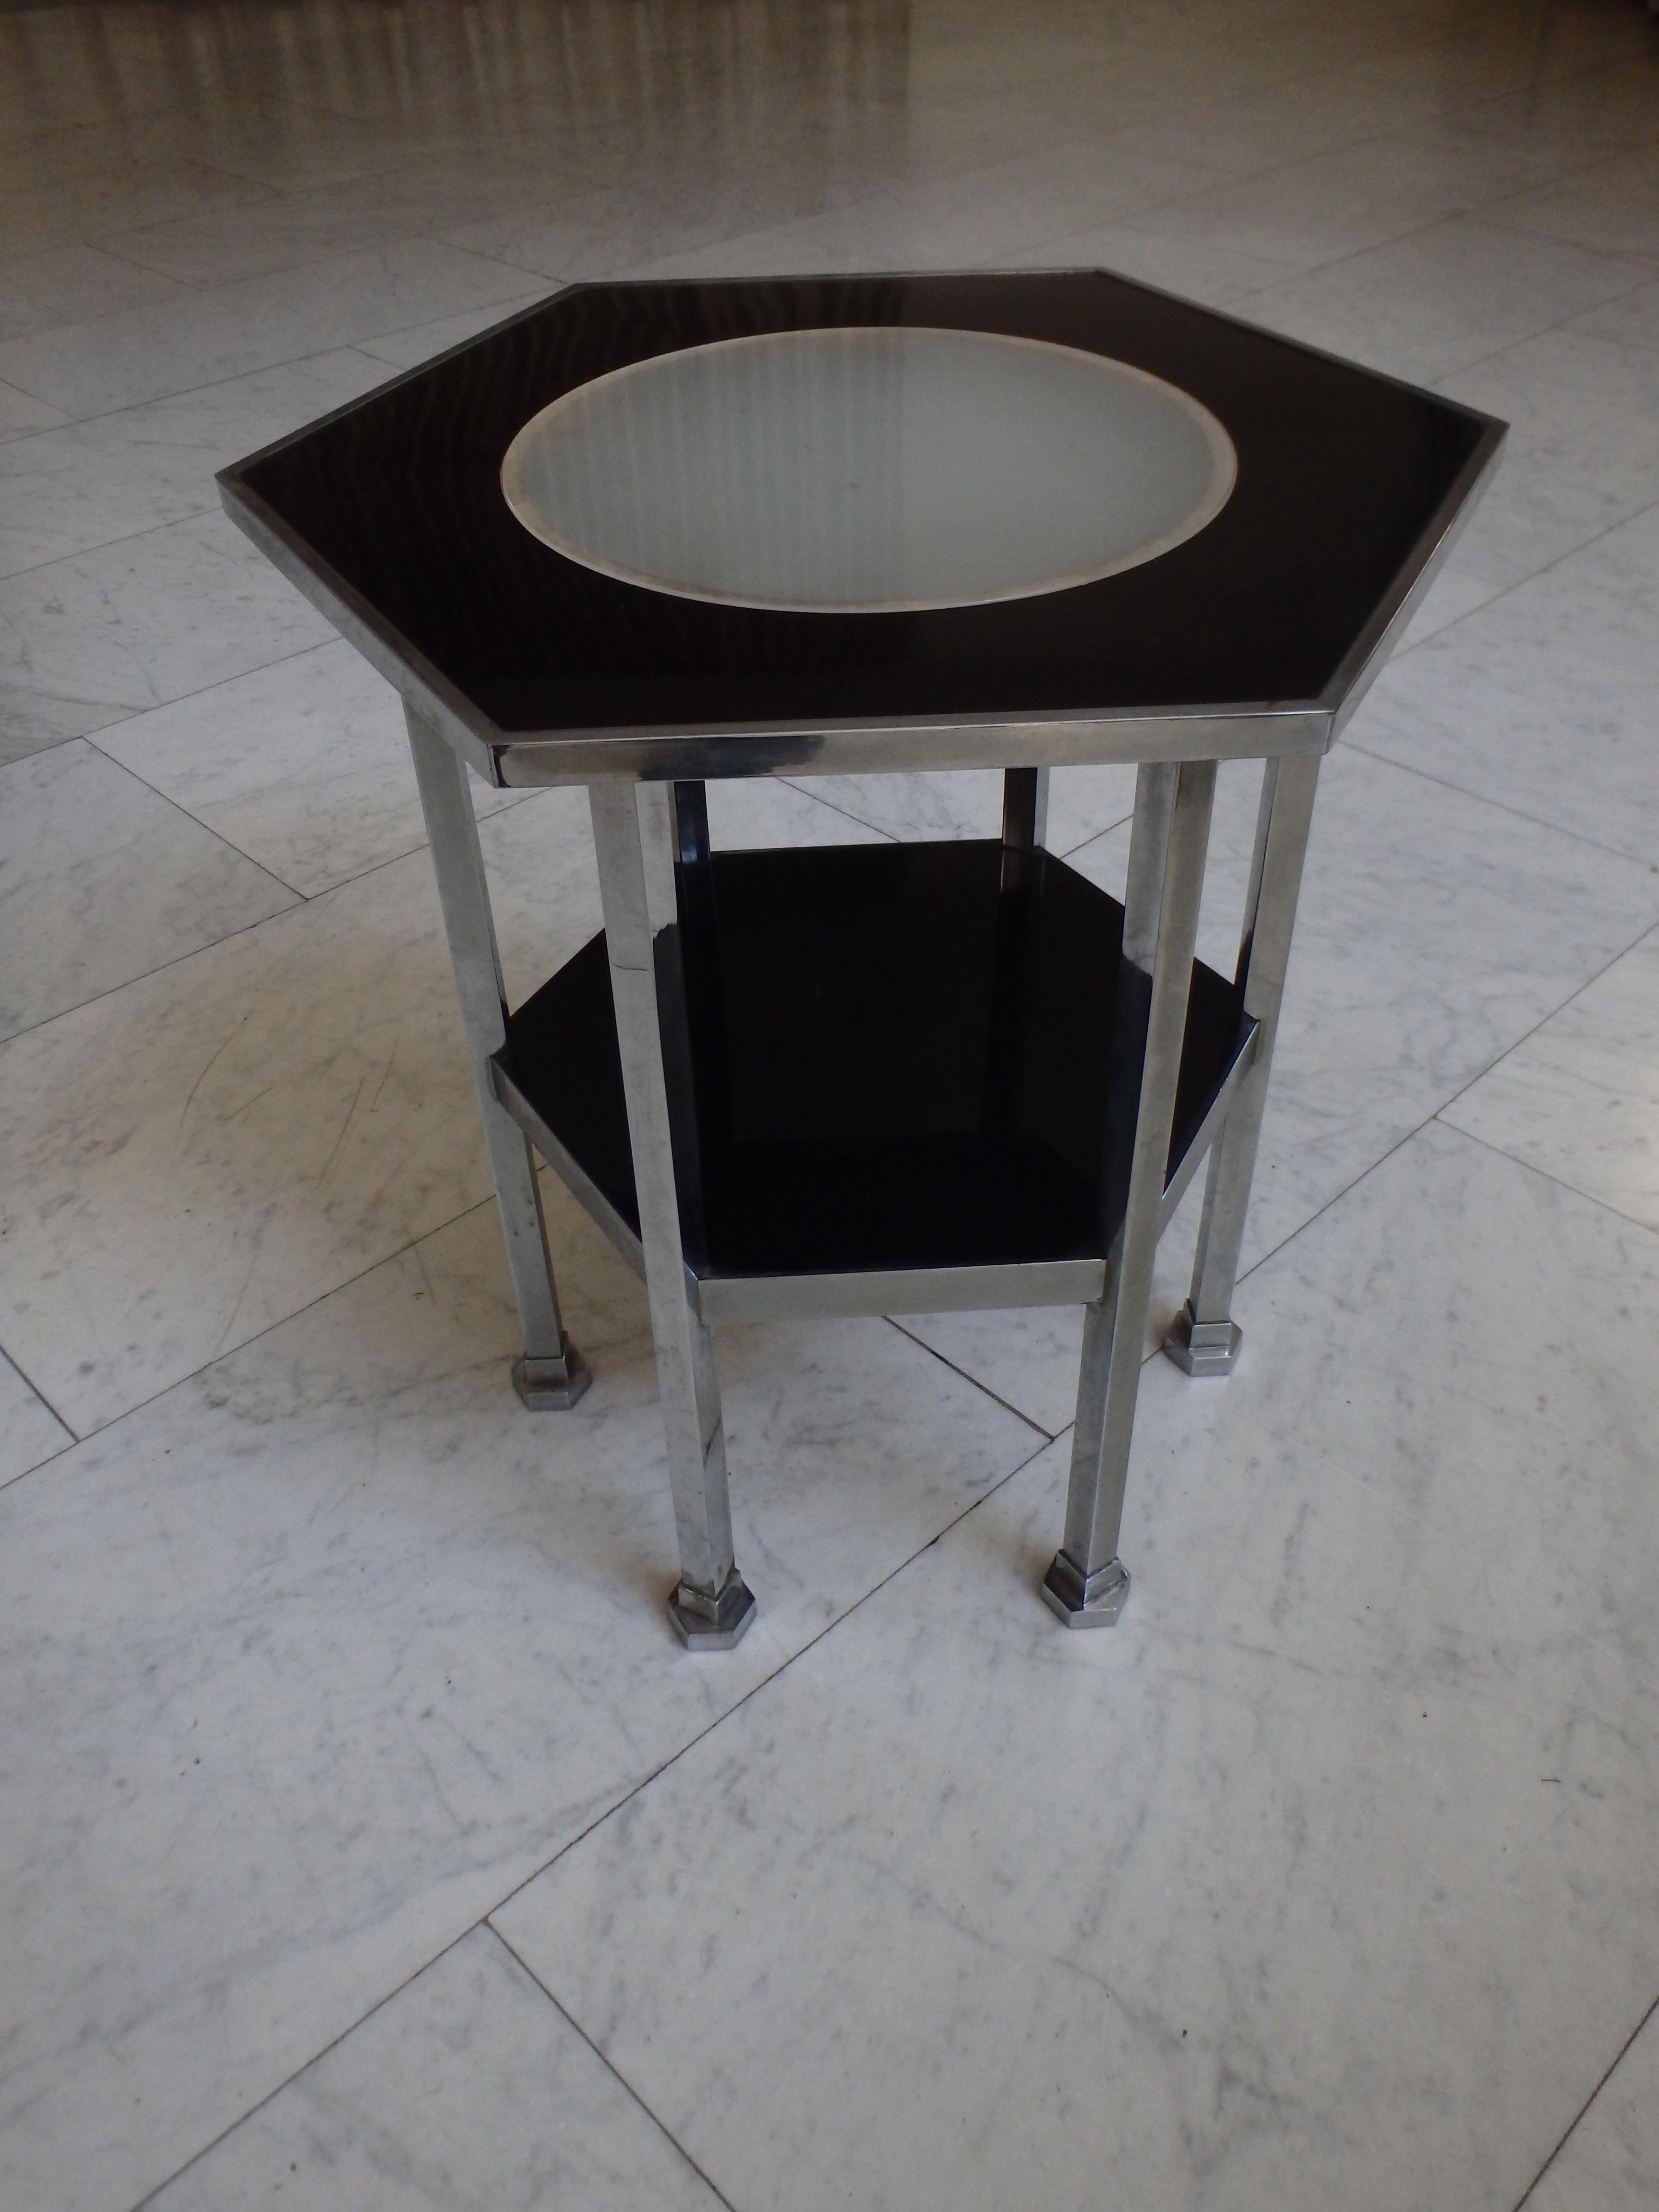 Bauhaus 2 top table with light inside chrome and black bakelite.